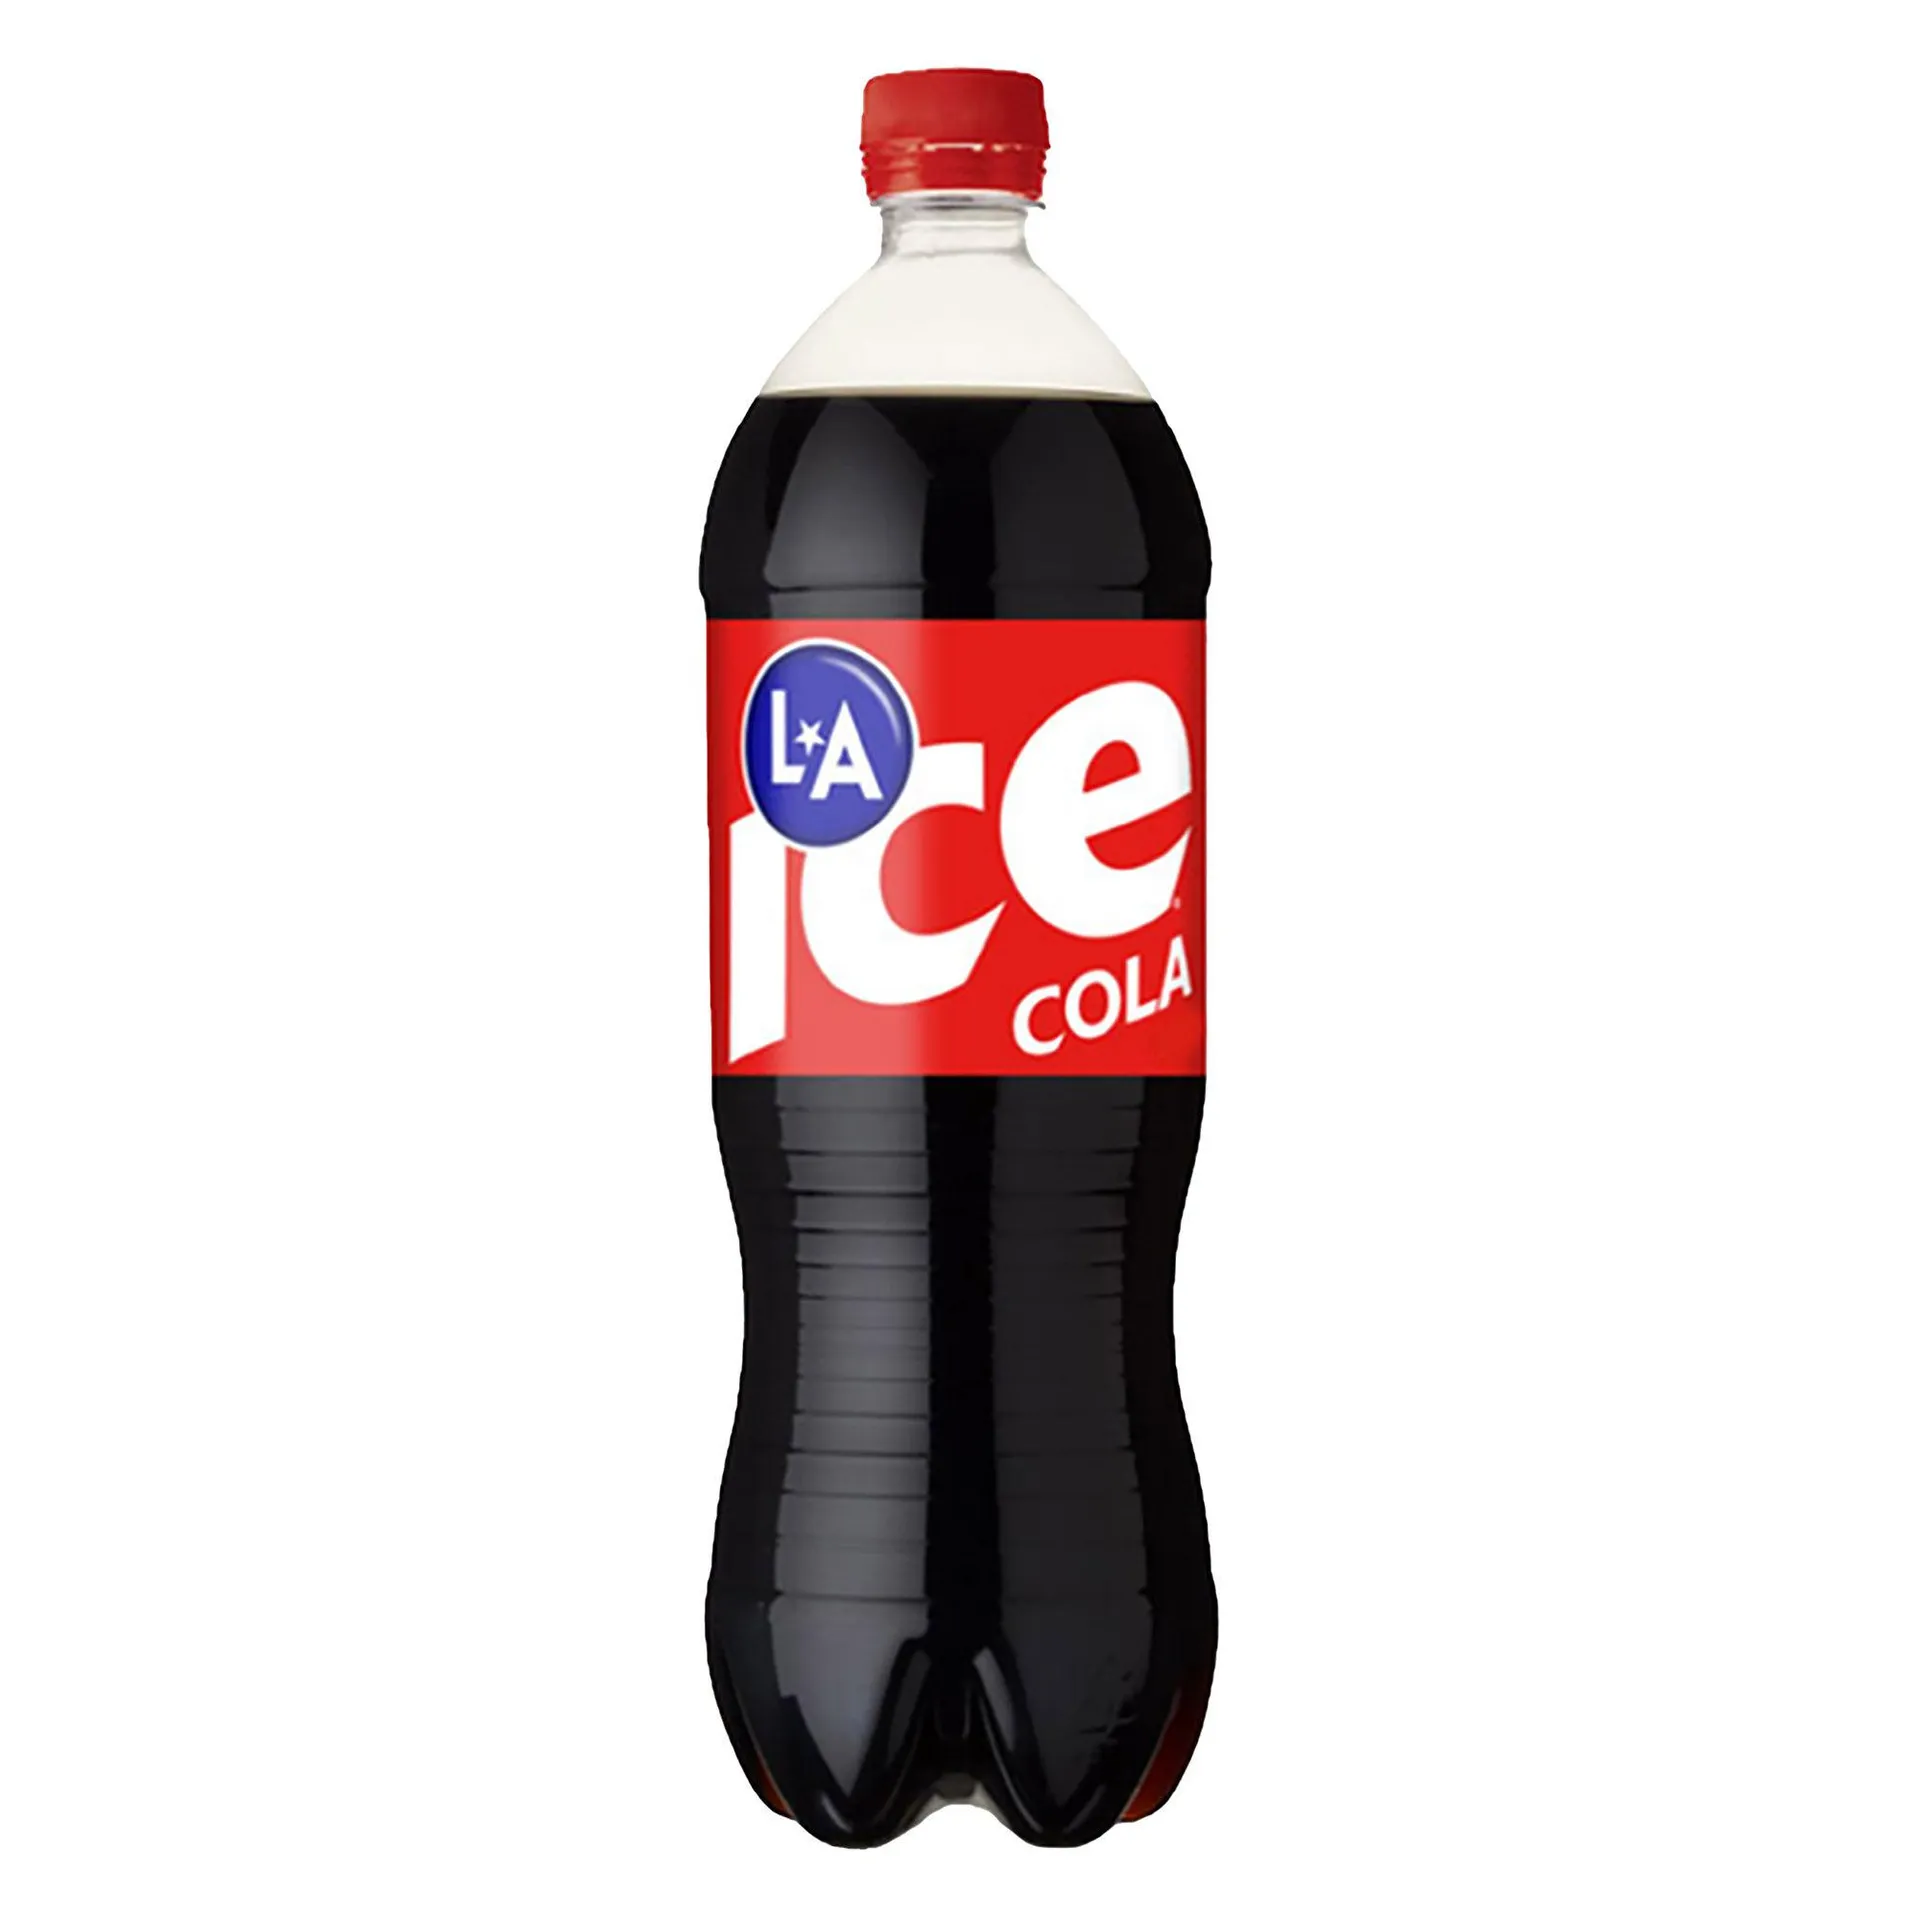 L.A. Ice Cola 1.25L